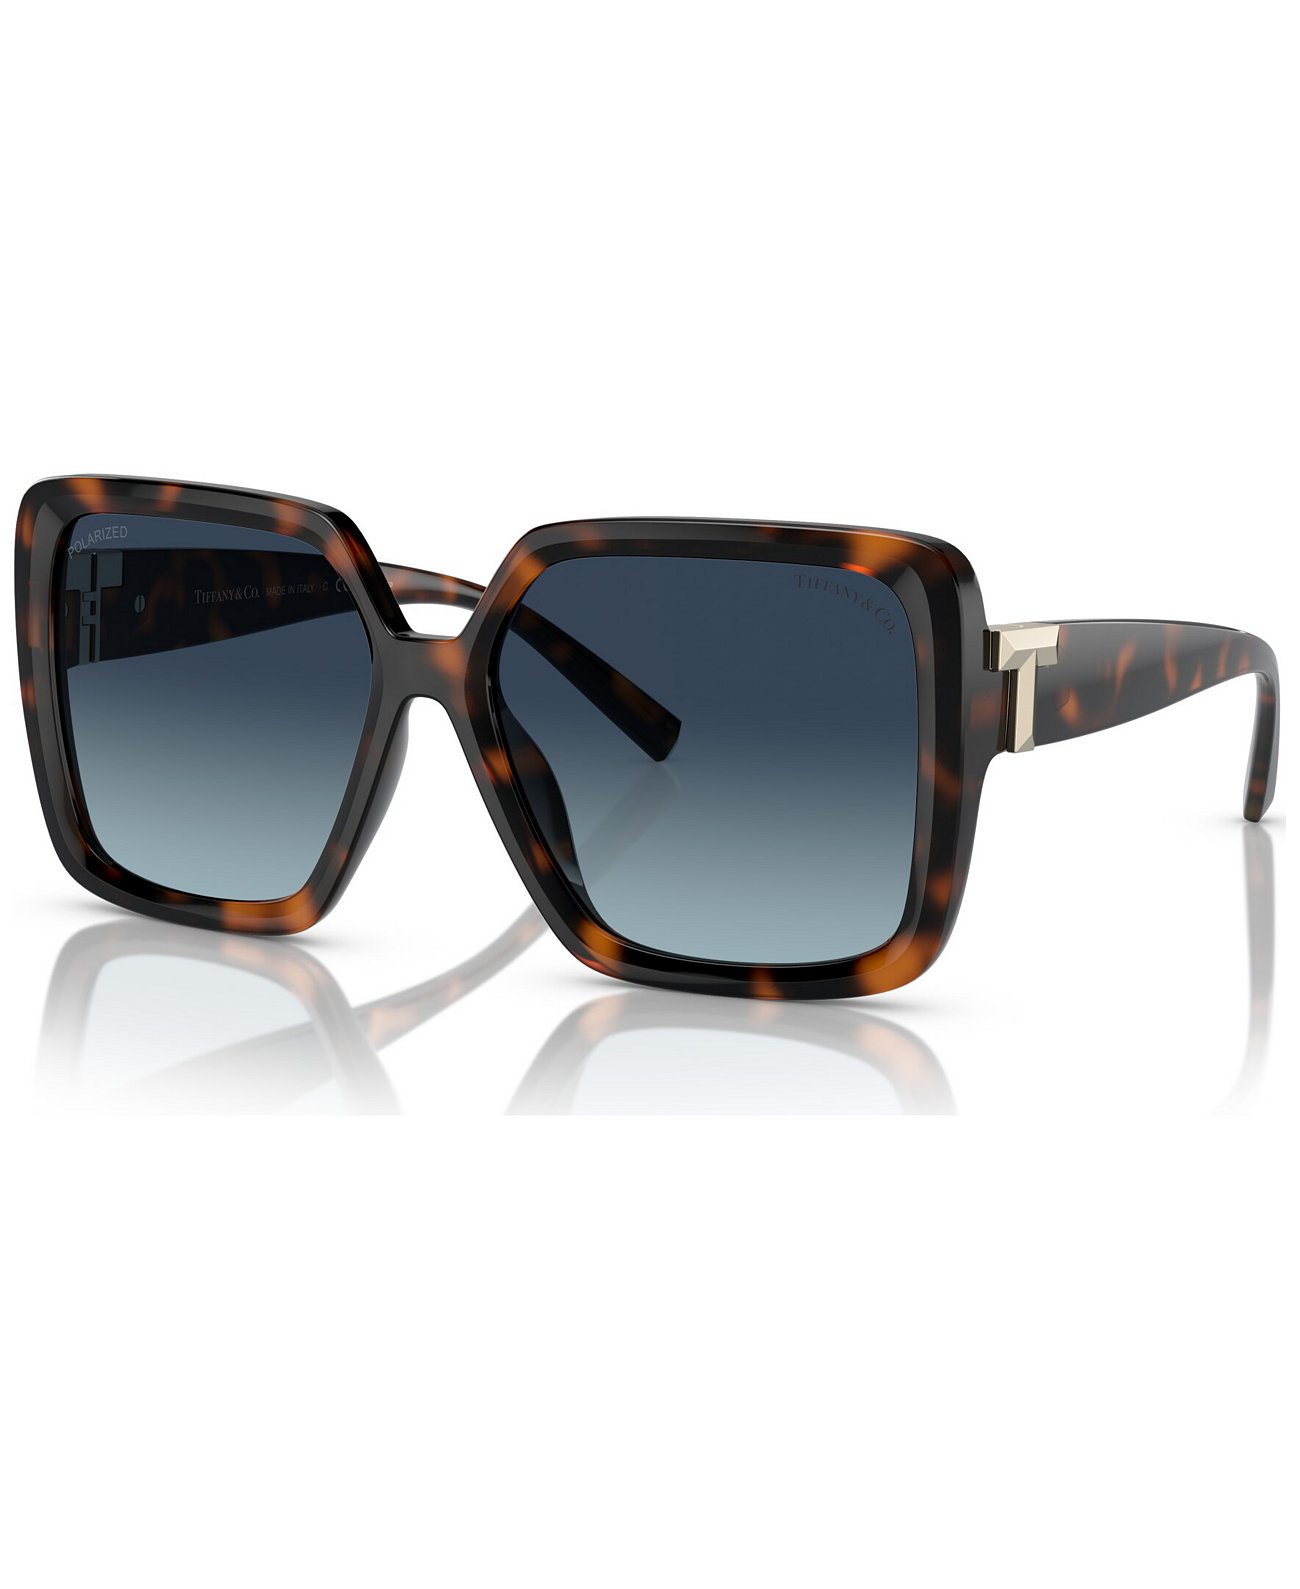 Women's Polarized Sunglasses, TF4206U Tiffany & Co.